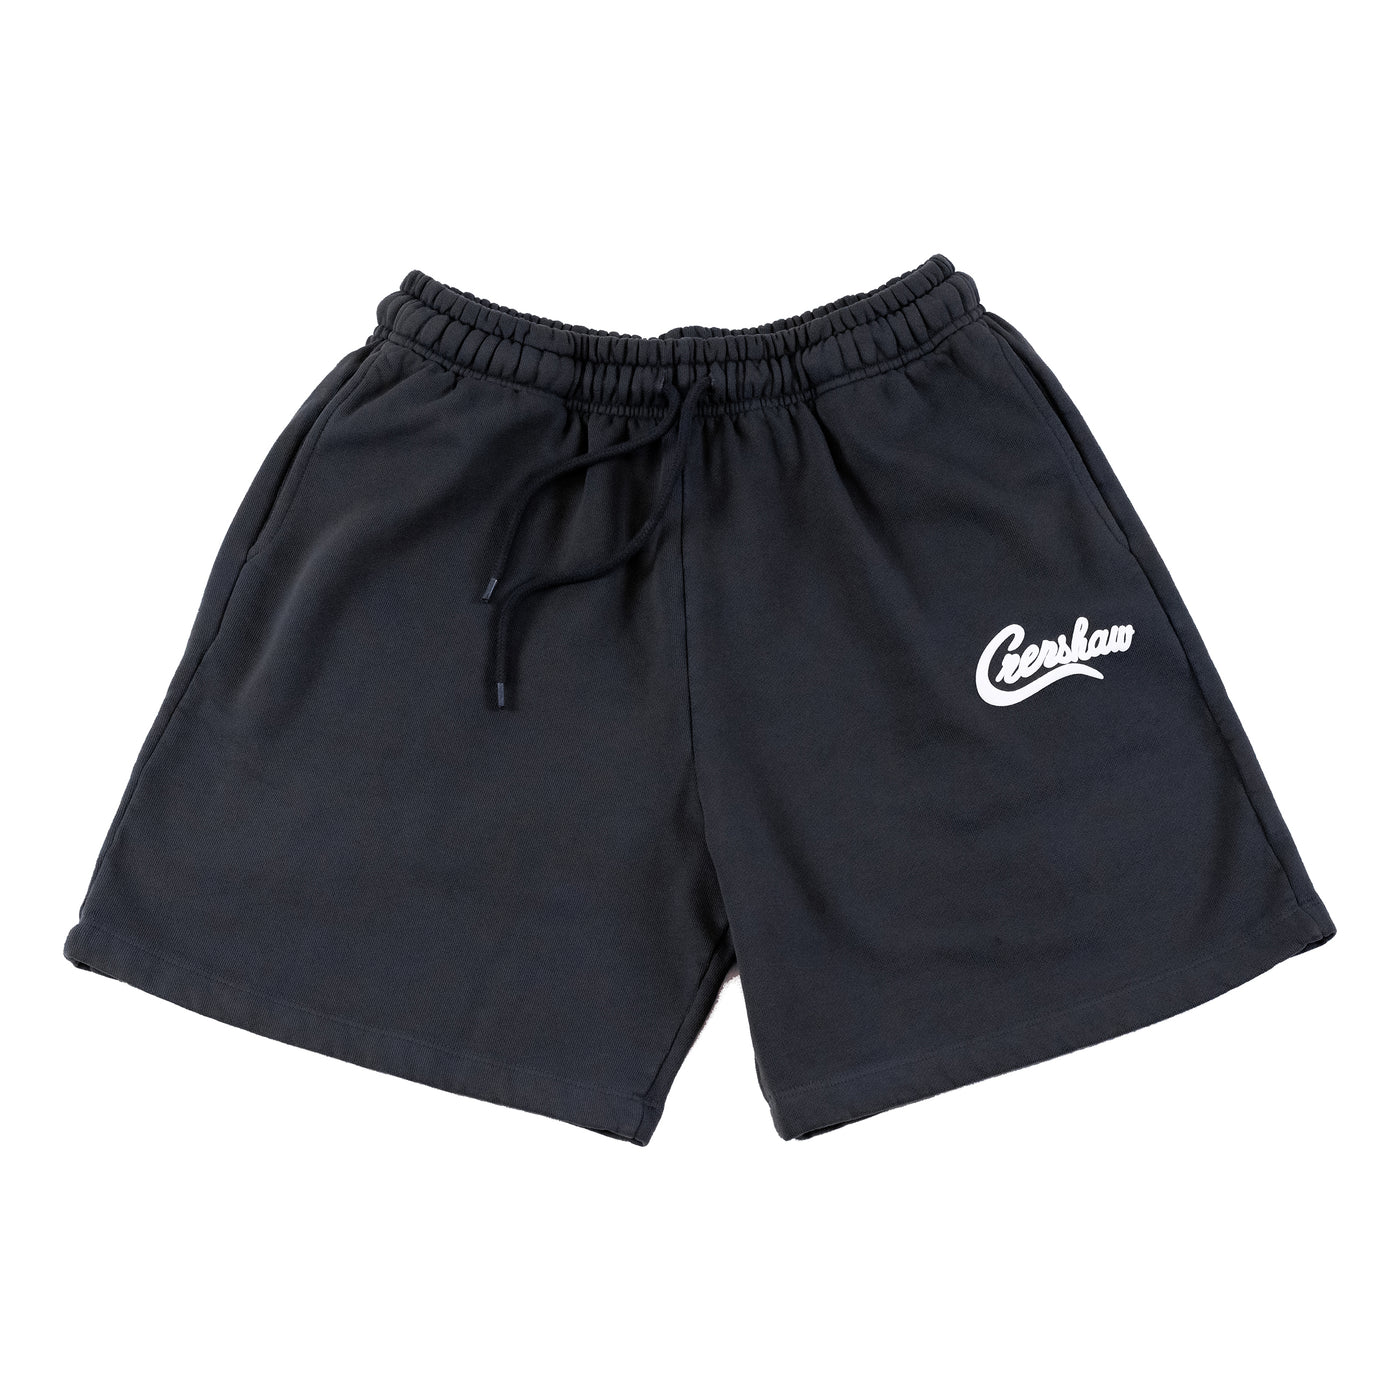 Crenshaw Classic LA Shorts - Charcoal/White